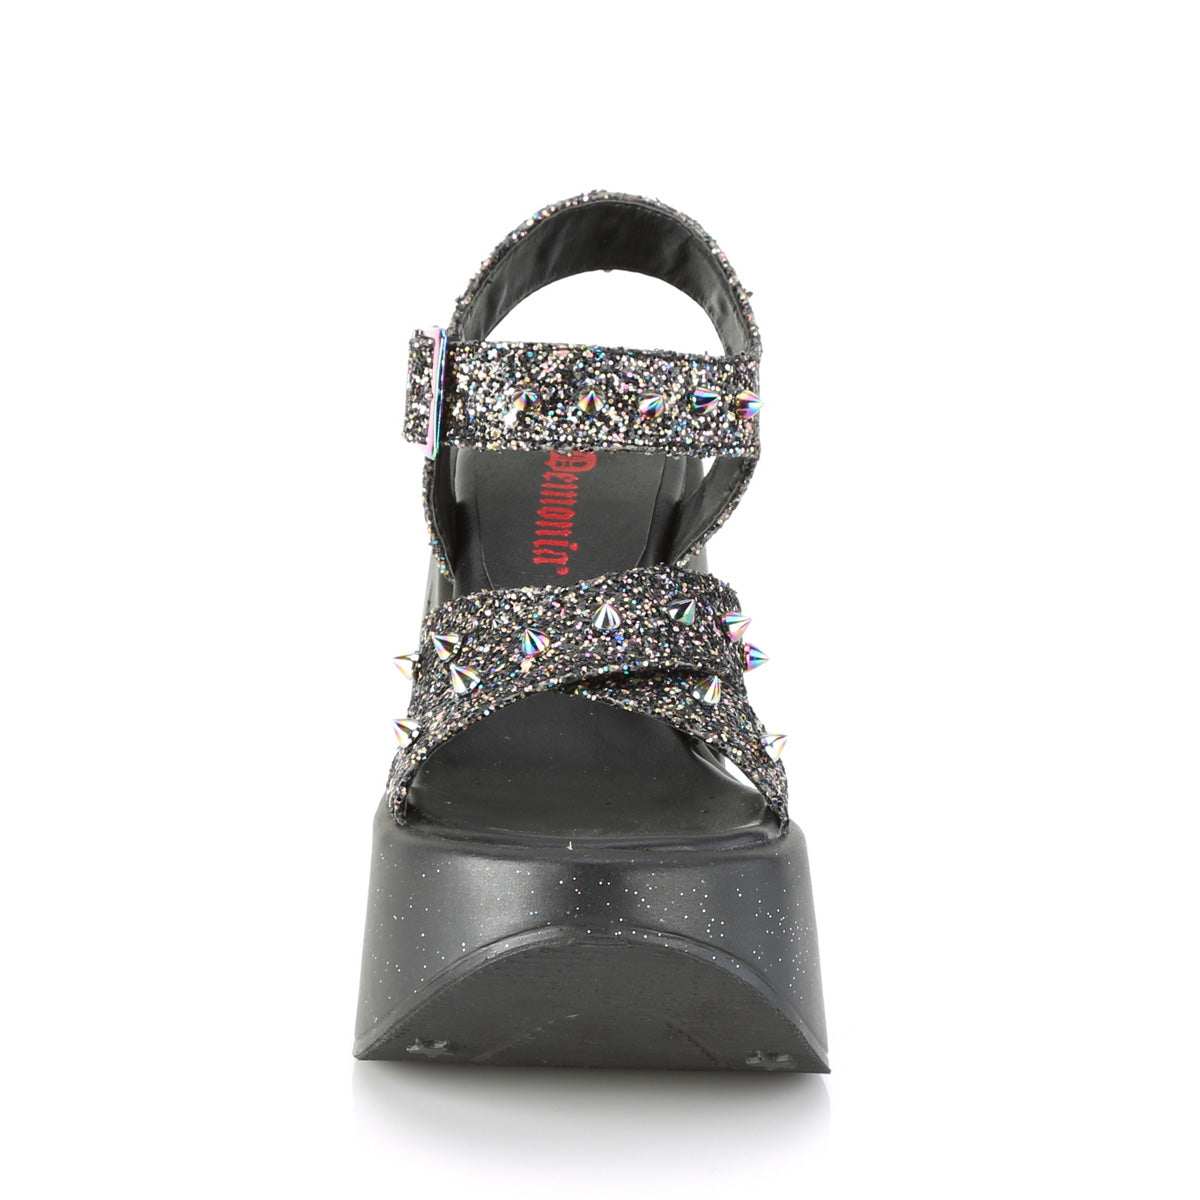 Midnight Star Wedge Black Multi Glitter Platform Sandal